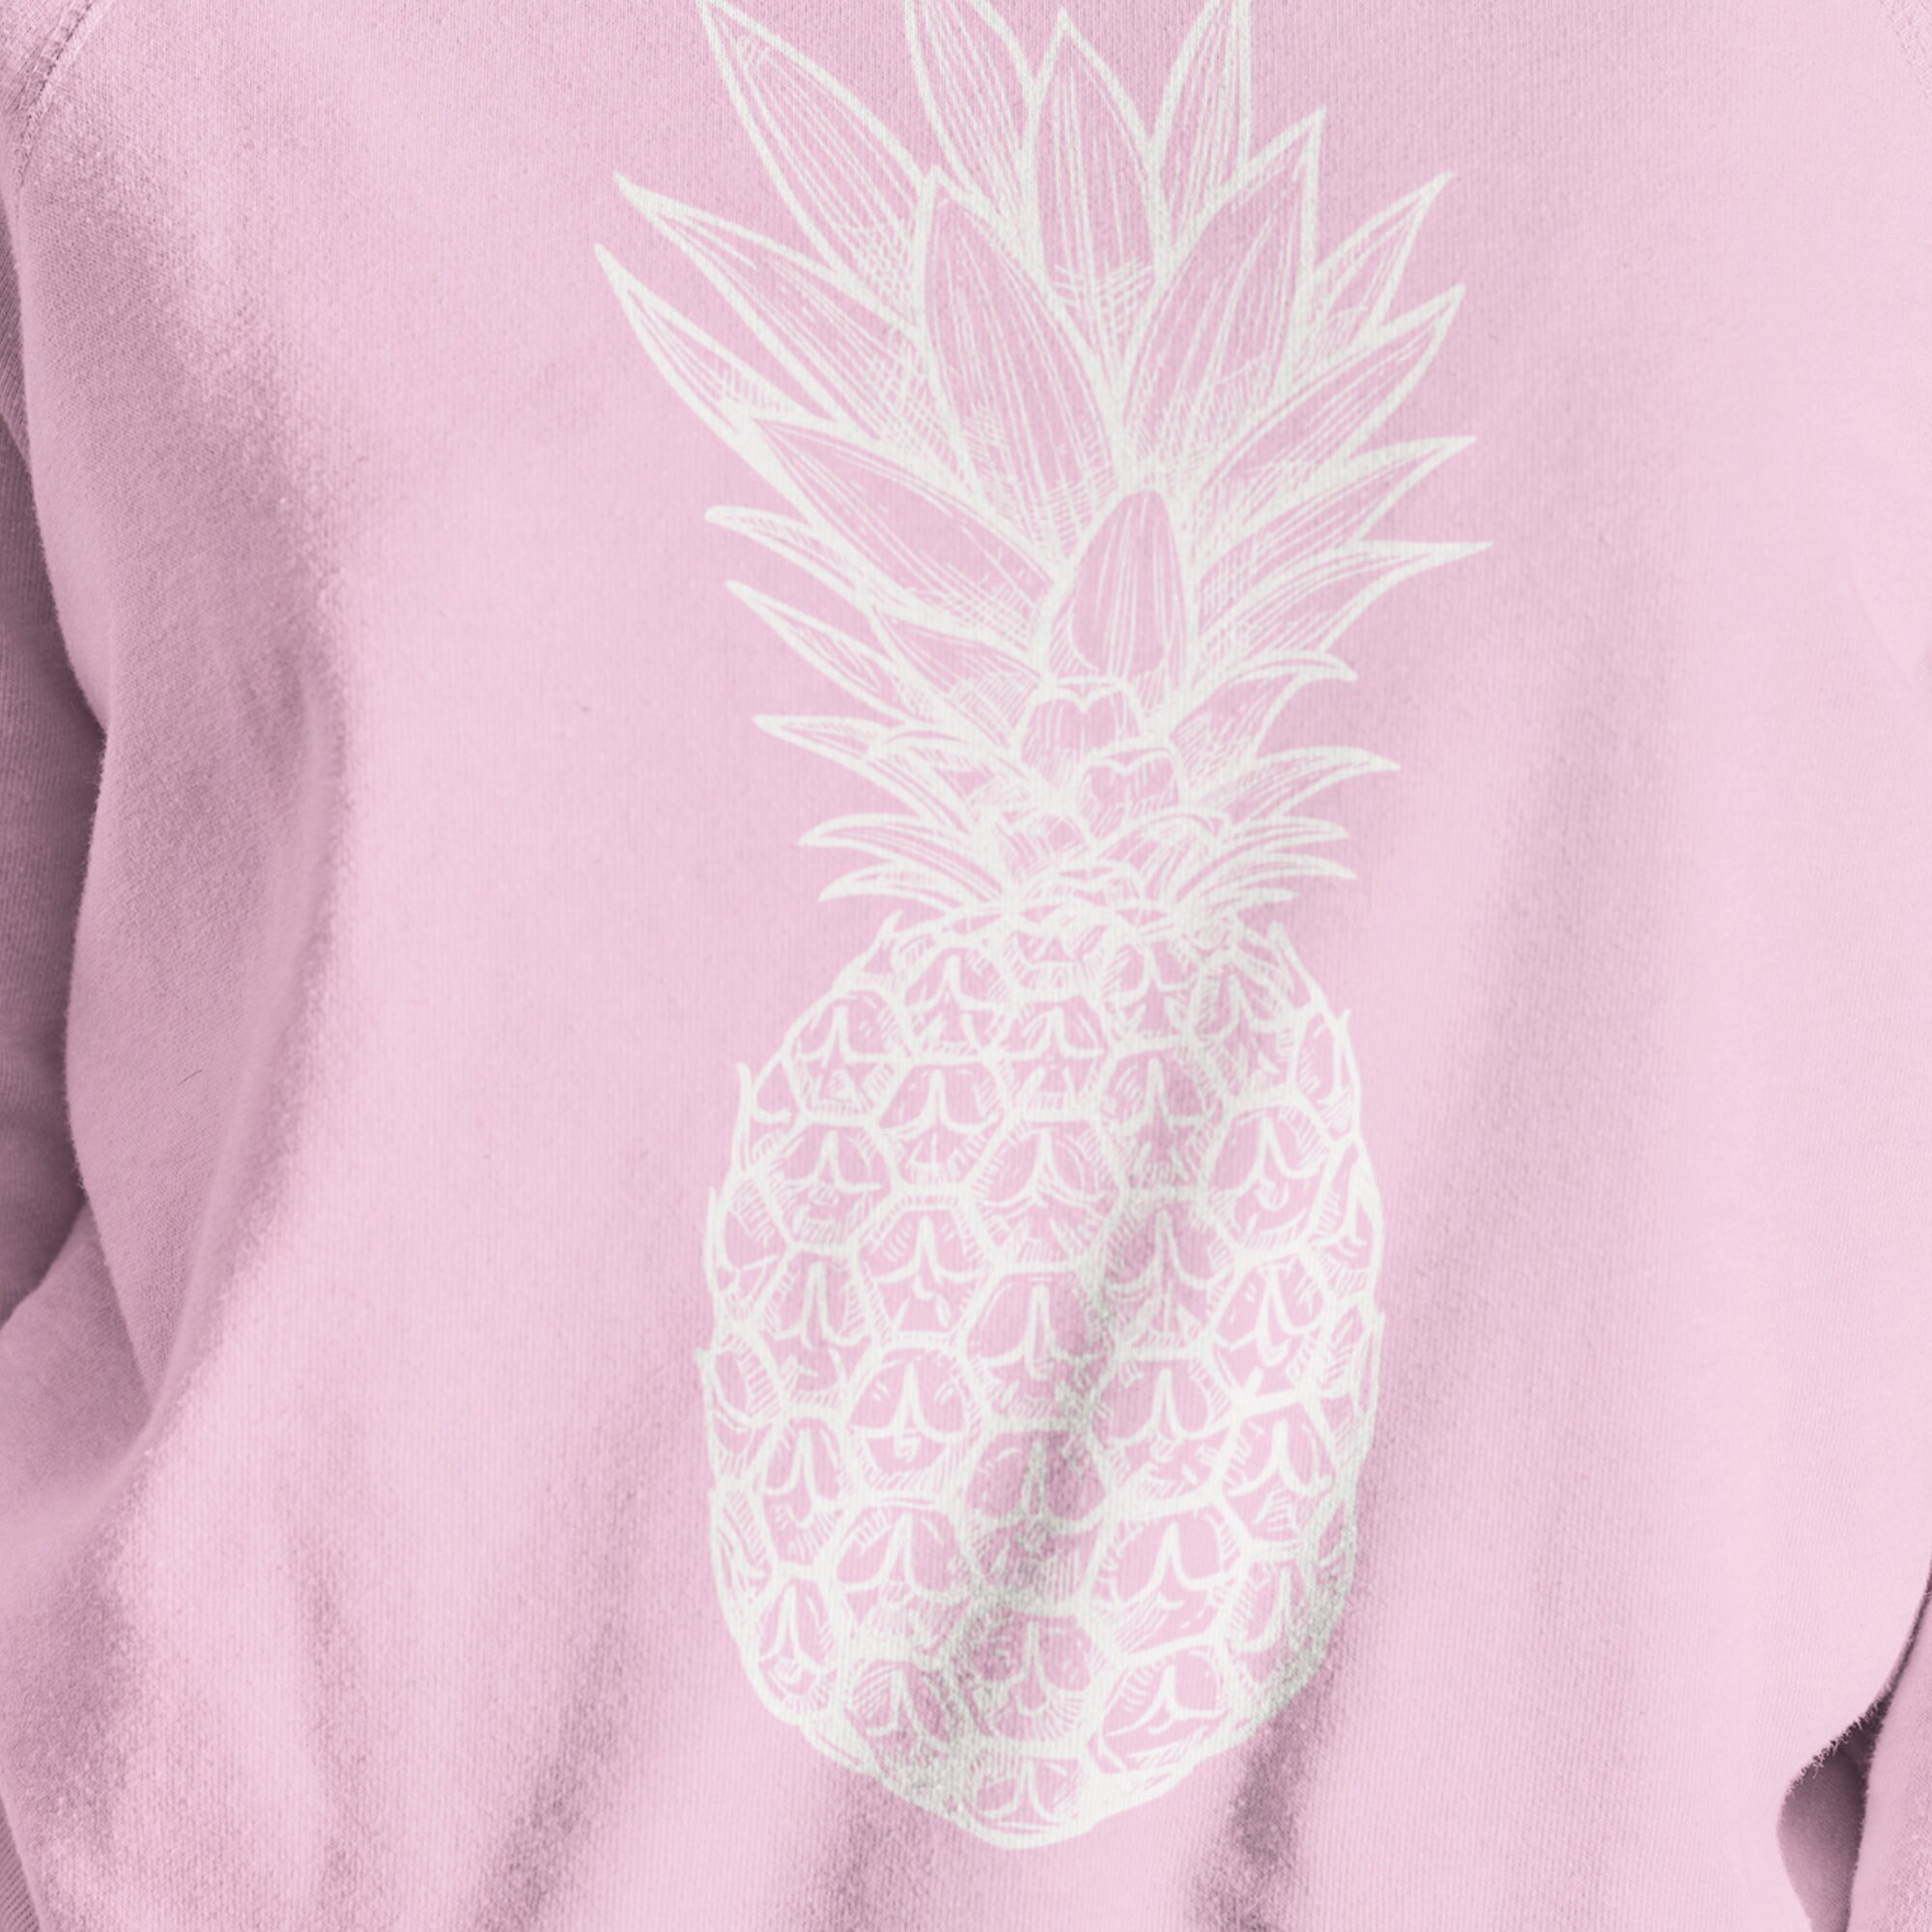 Oversized Pink Pineapple Sweatshirt Crewneck Pullover - Etsy